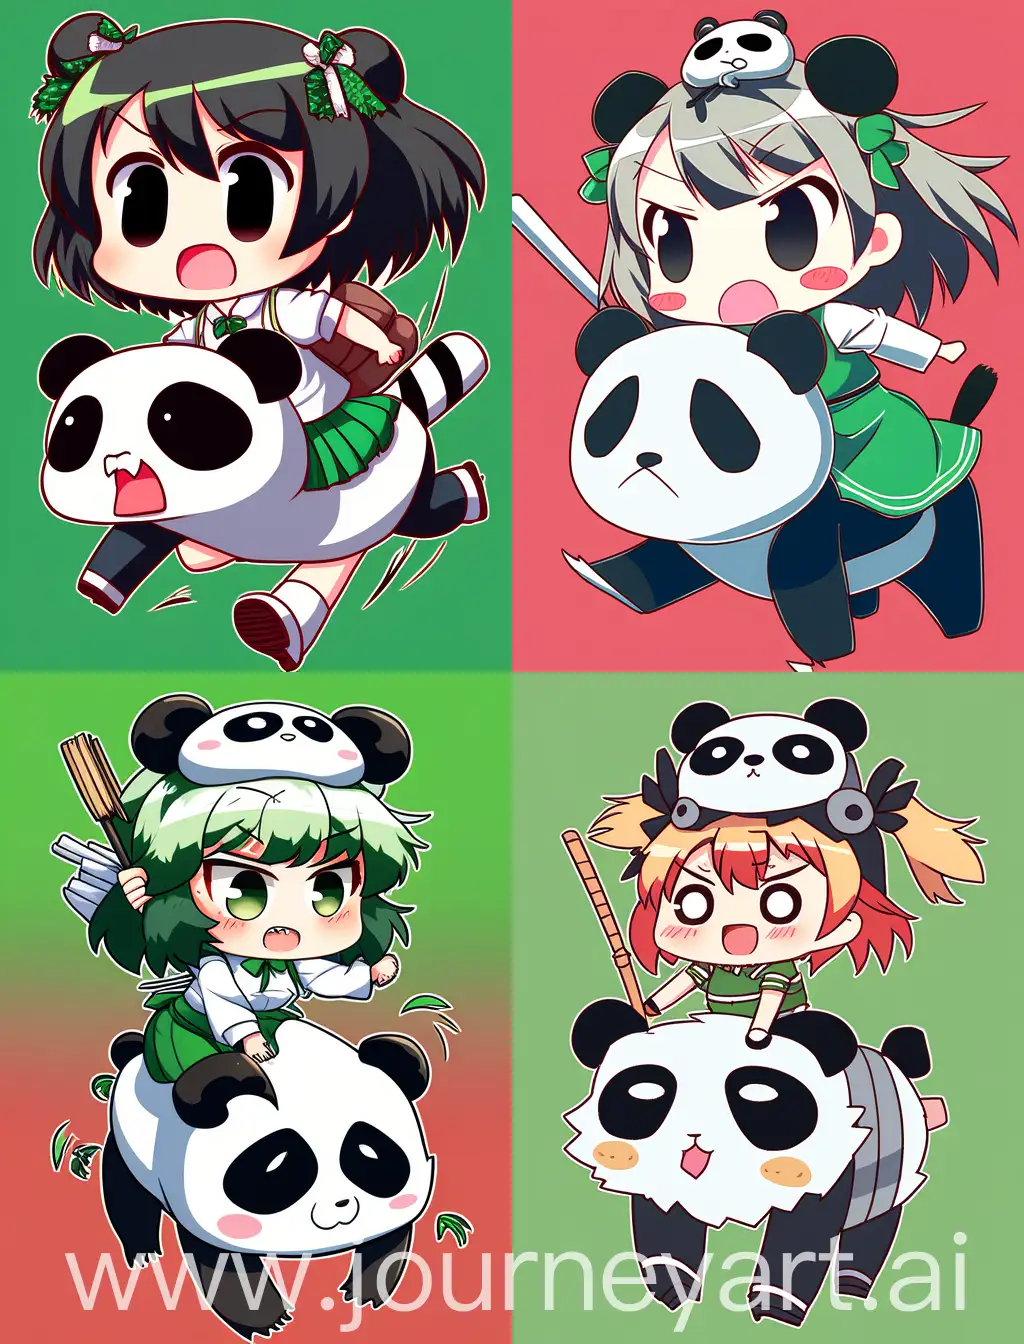 Fiery-Chibi-Anime-Girl-Riding-Panda-Vibrant-Cartoon-Illustration